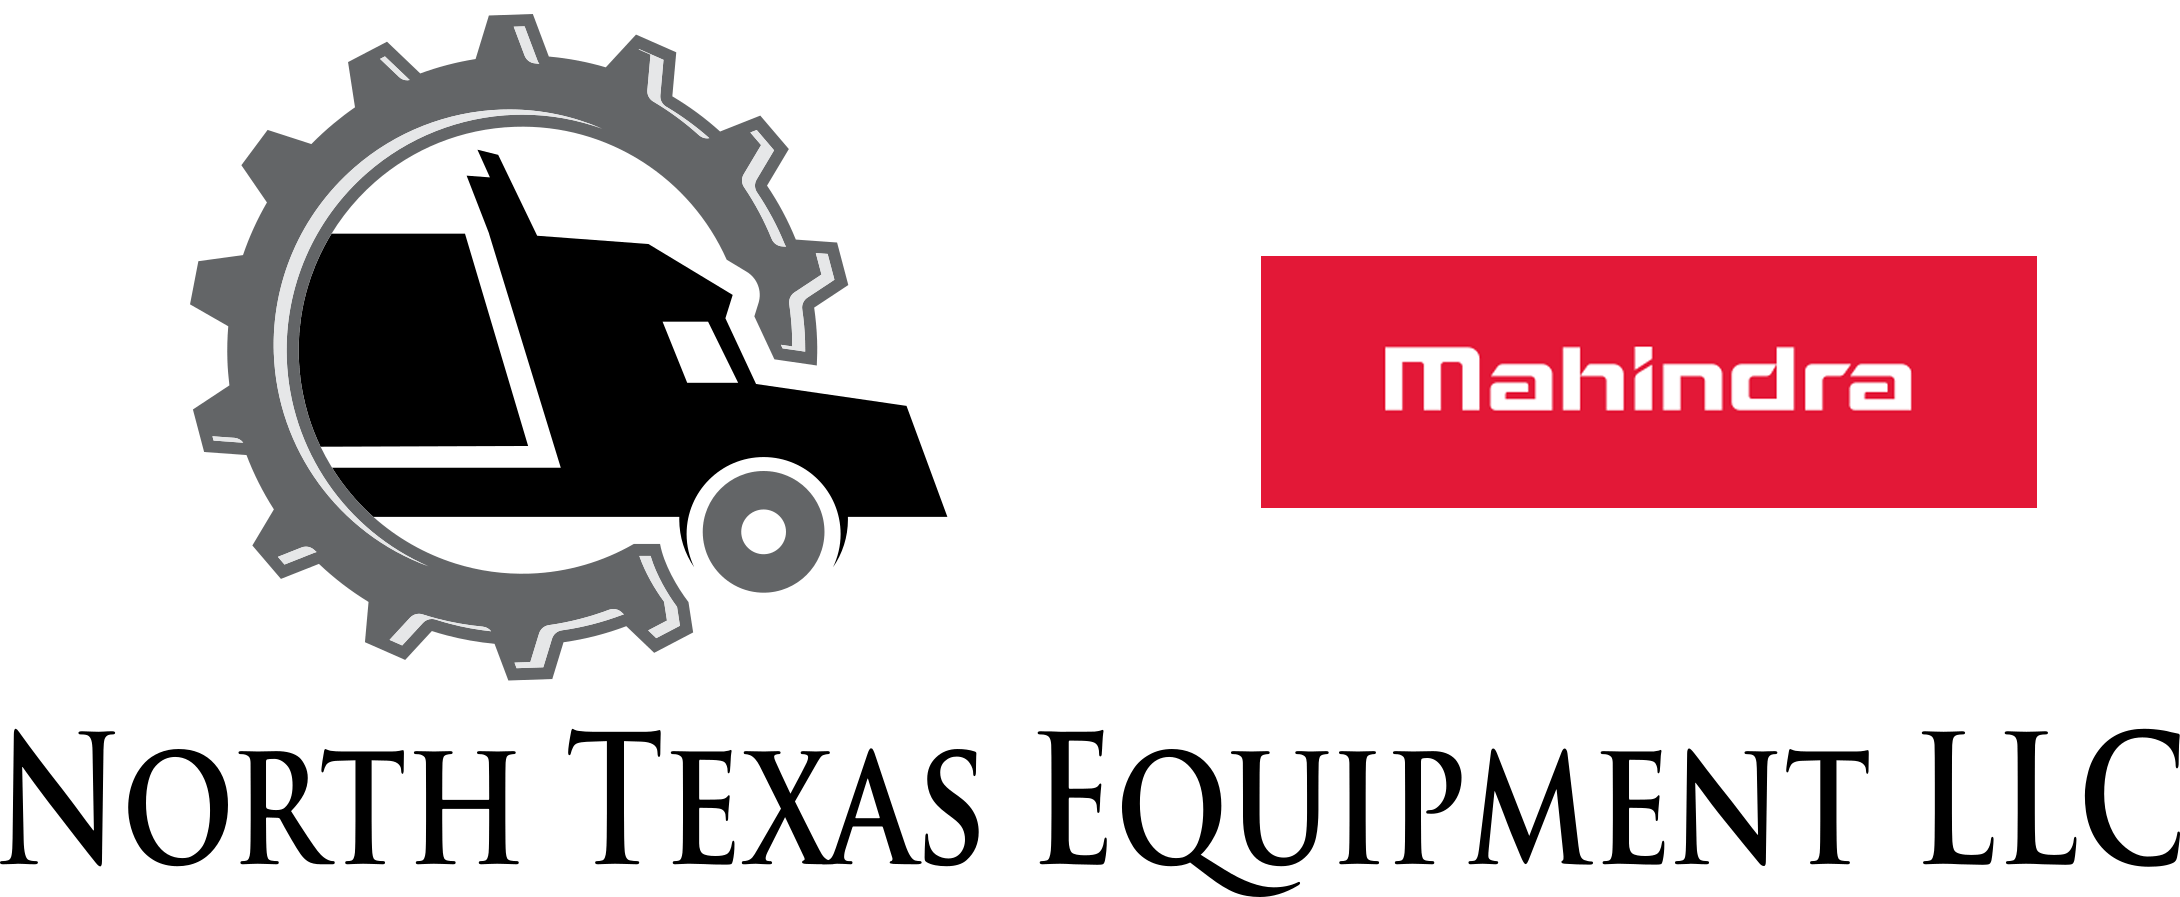 Equipment Logo - Heavy Equpment Fort Worth. North Texas Equipment